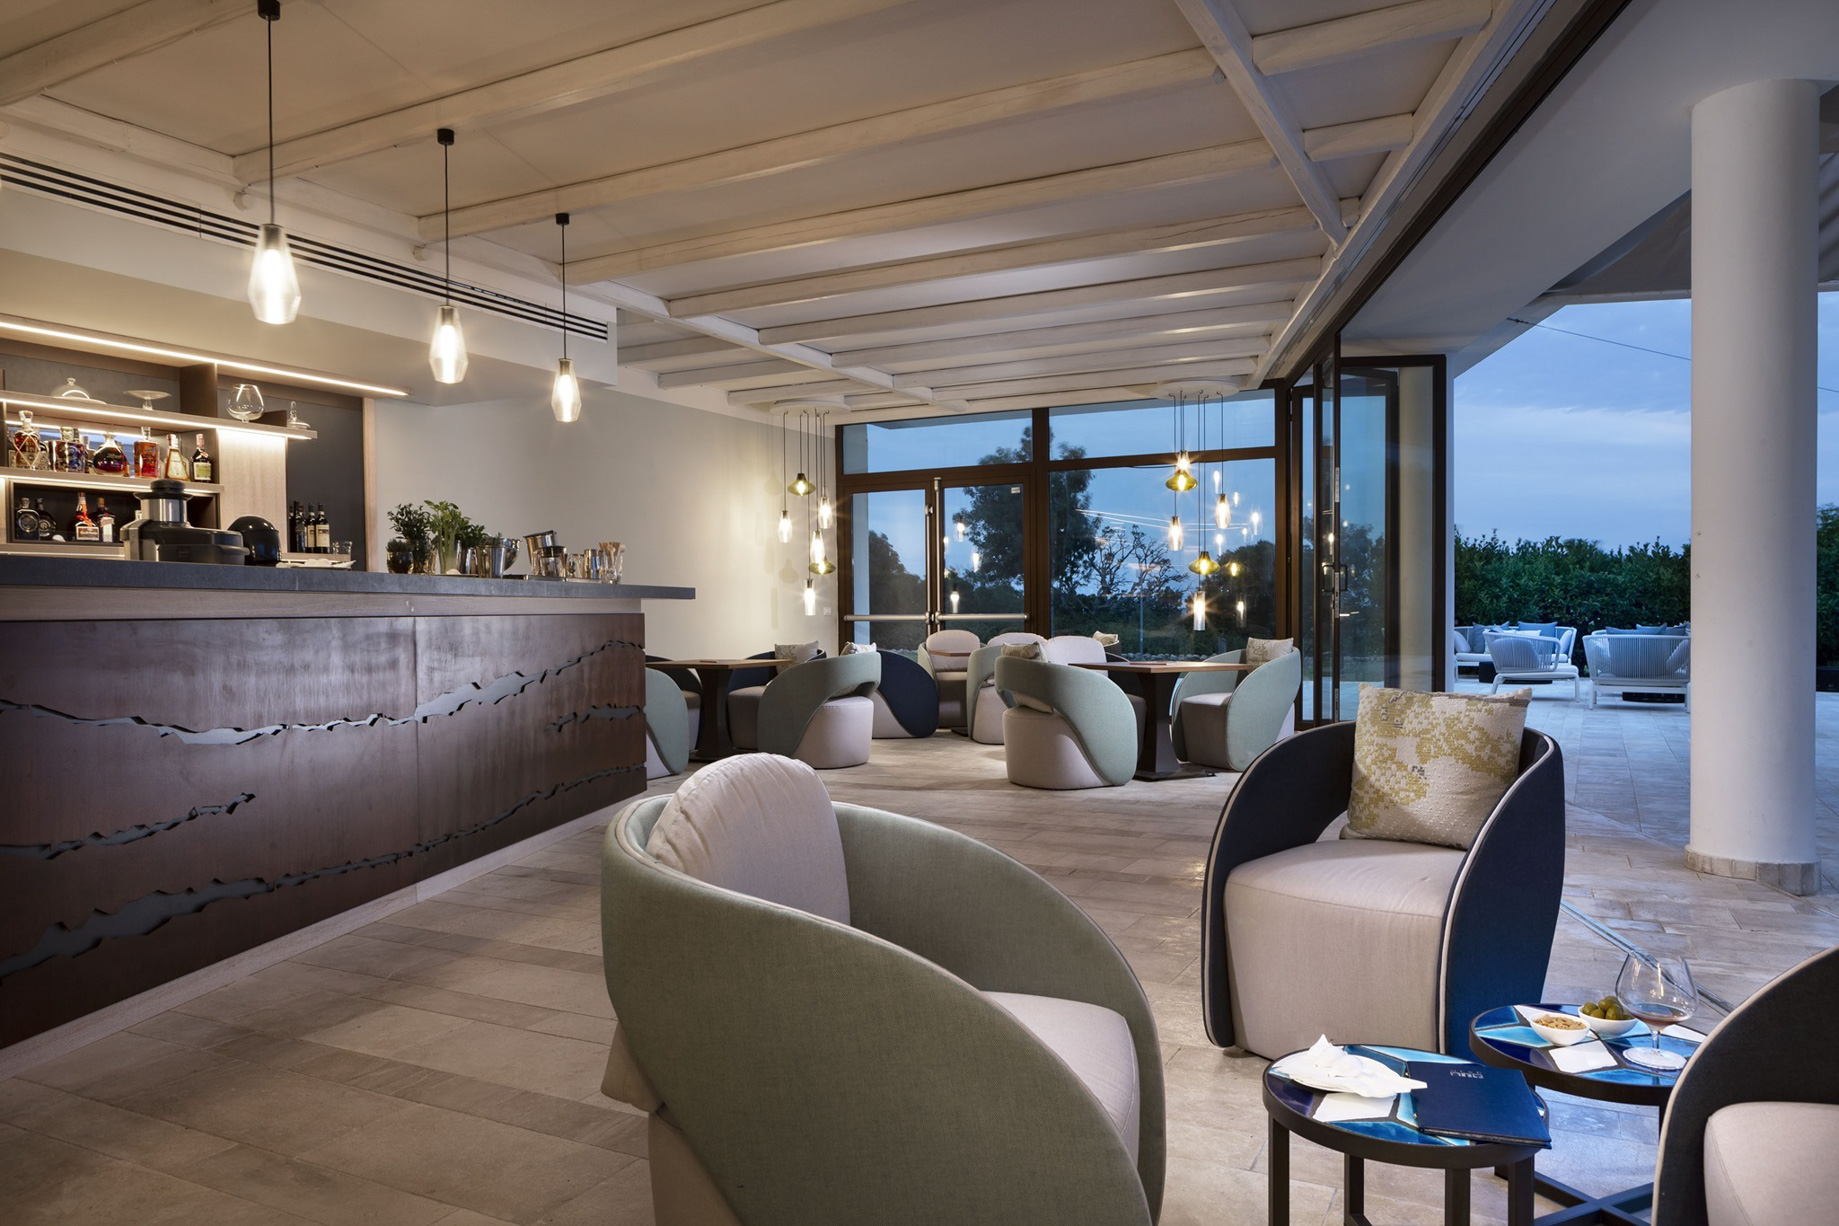 Baglioni Resort Sardinia – San Teodoro, Sardegna, Italy – Pool Bar Interior